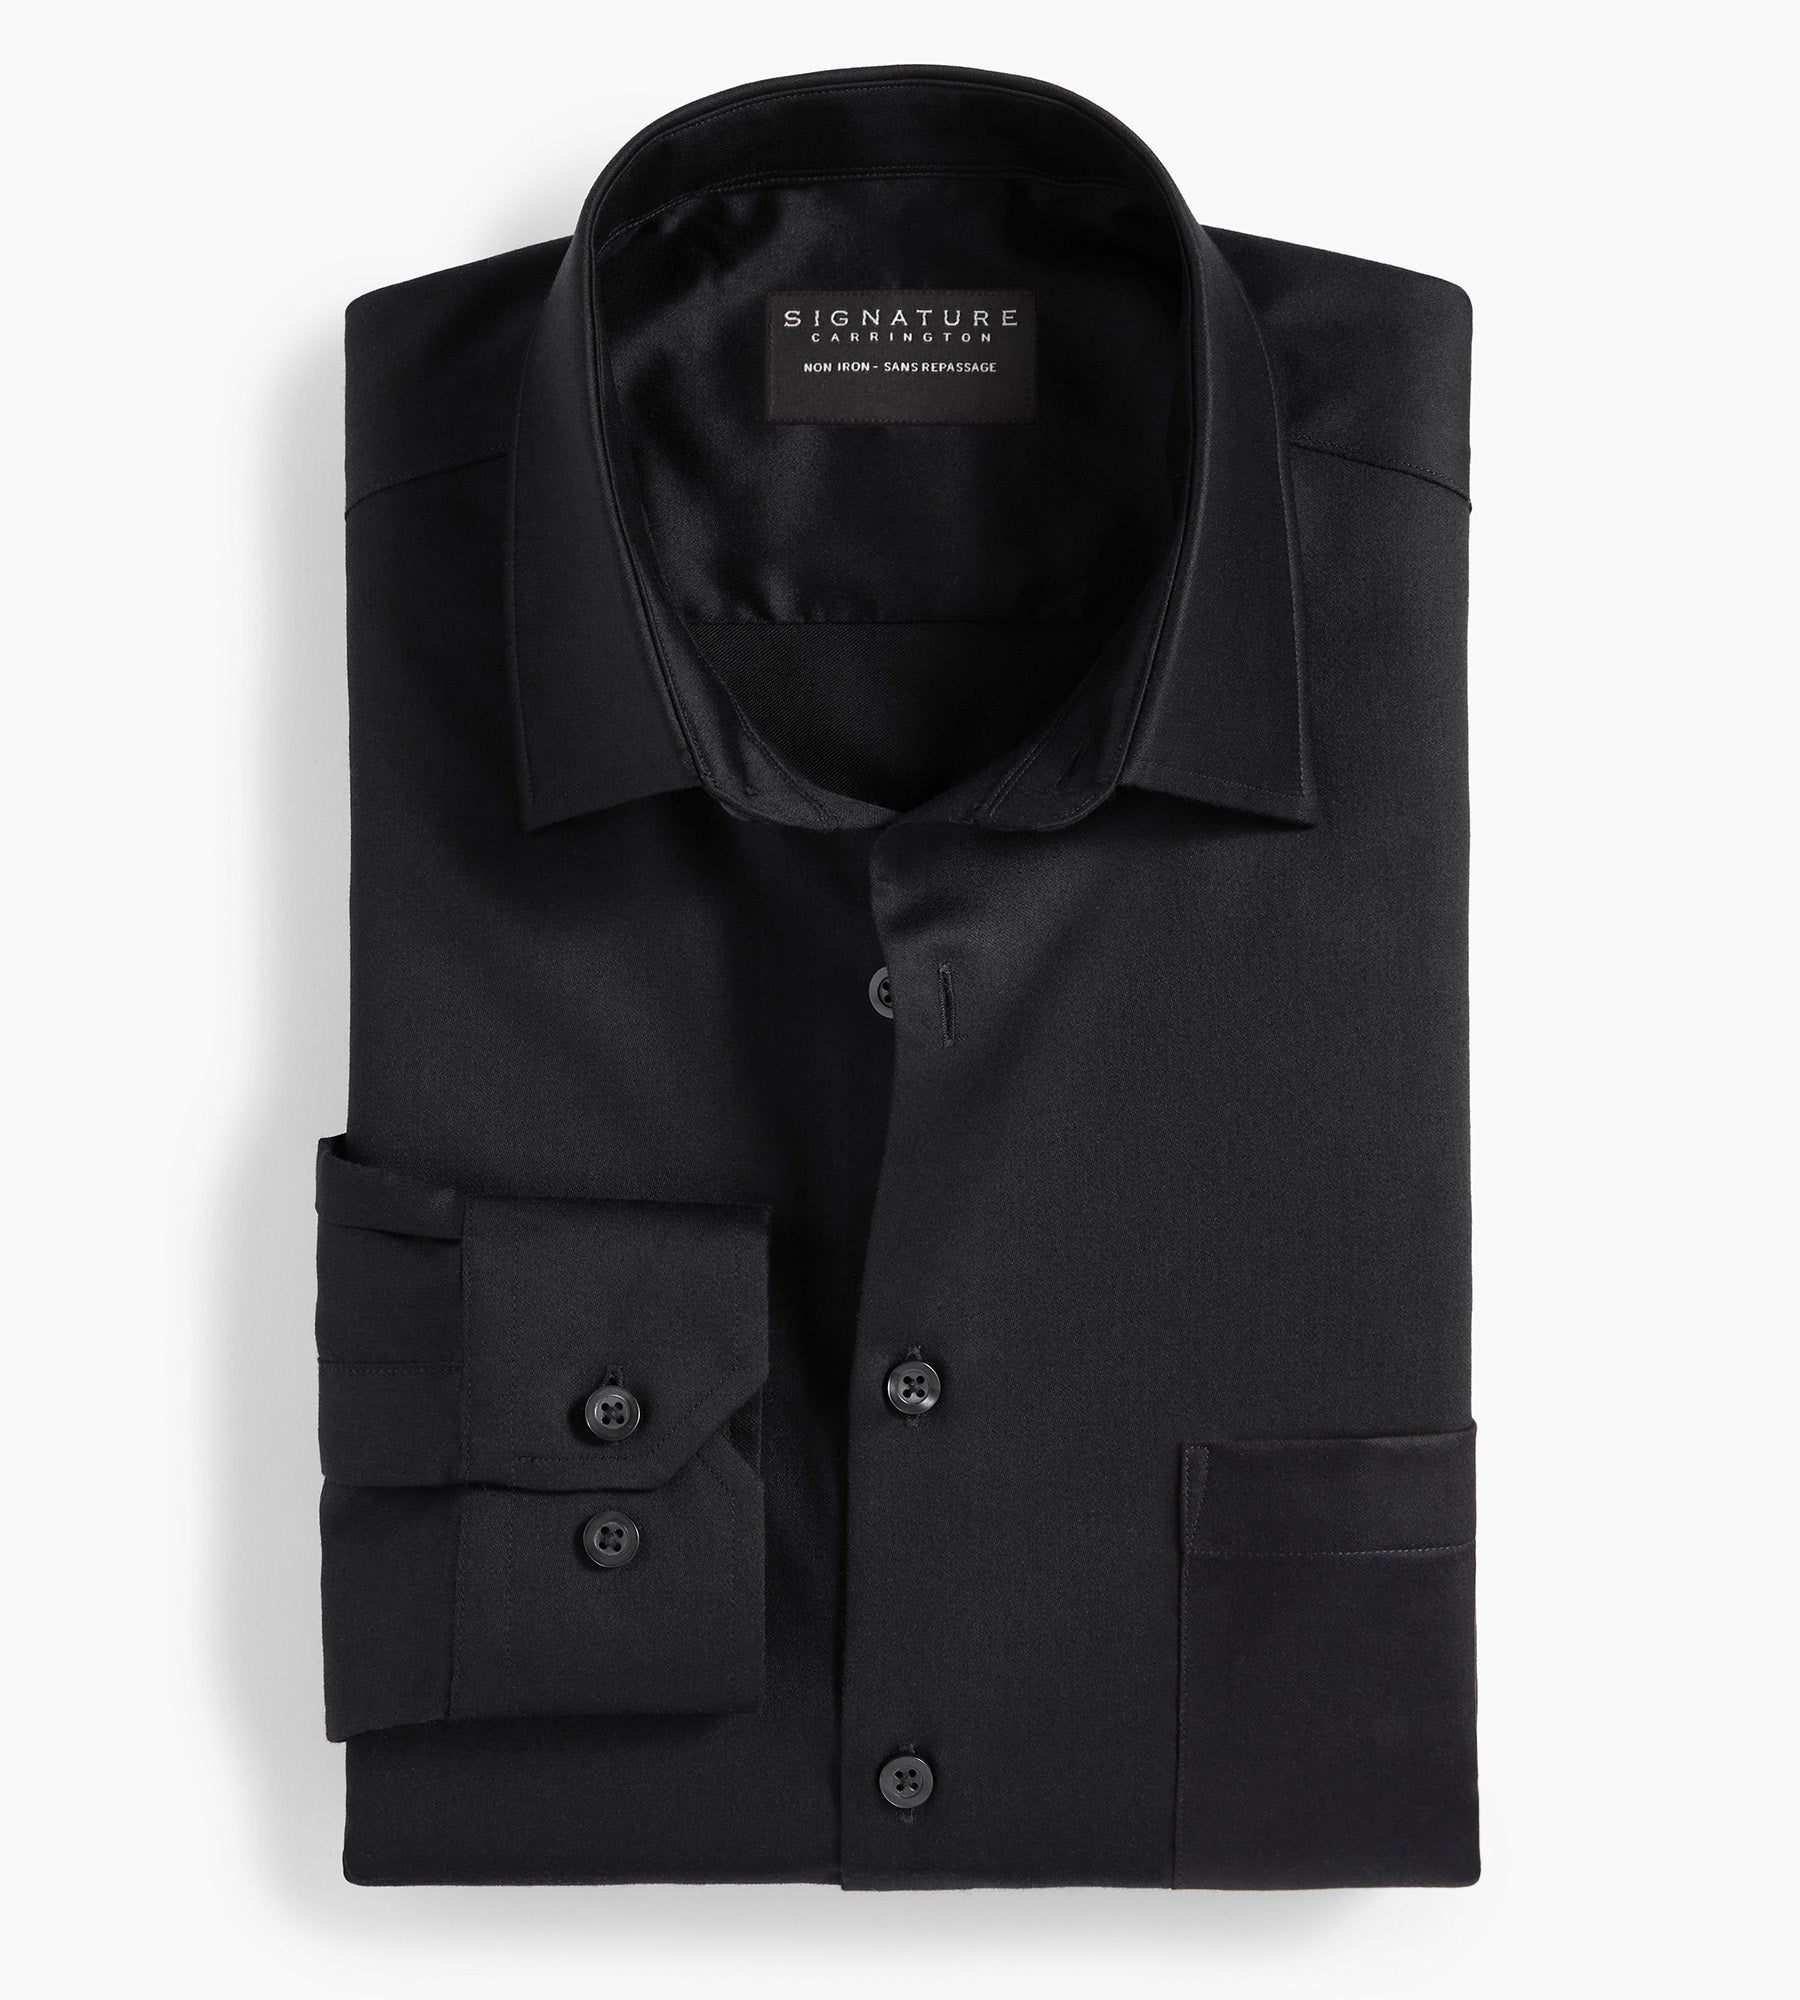 The Classic Black – Cotton Shirt